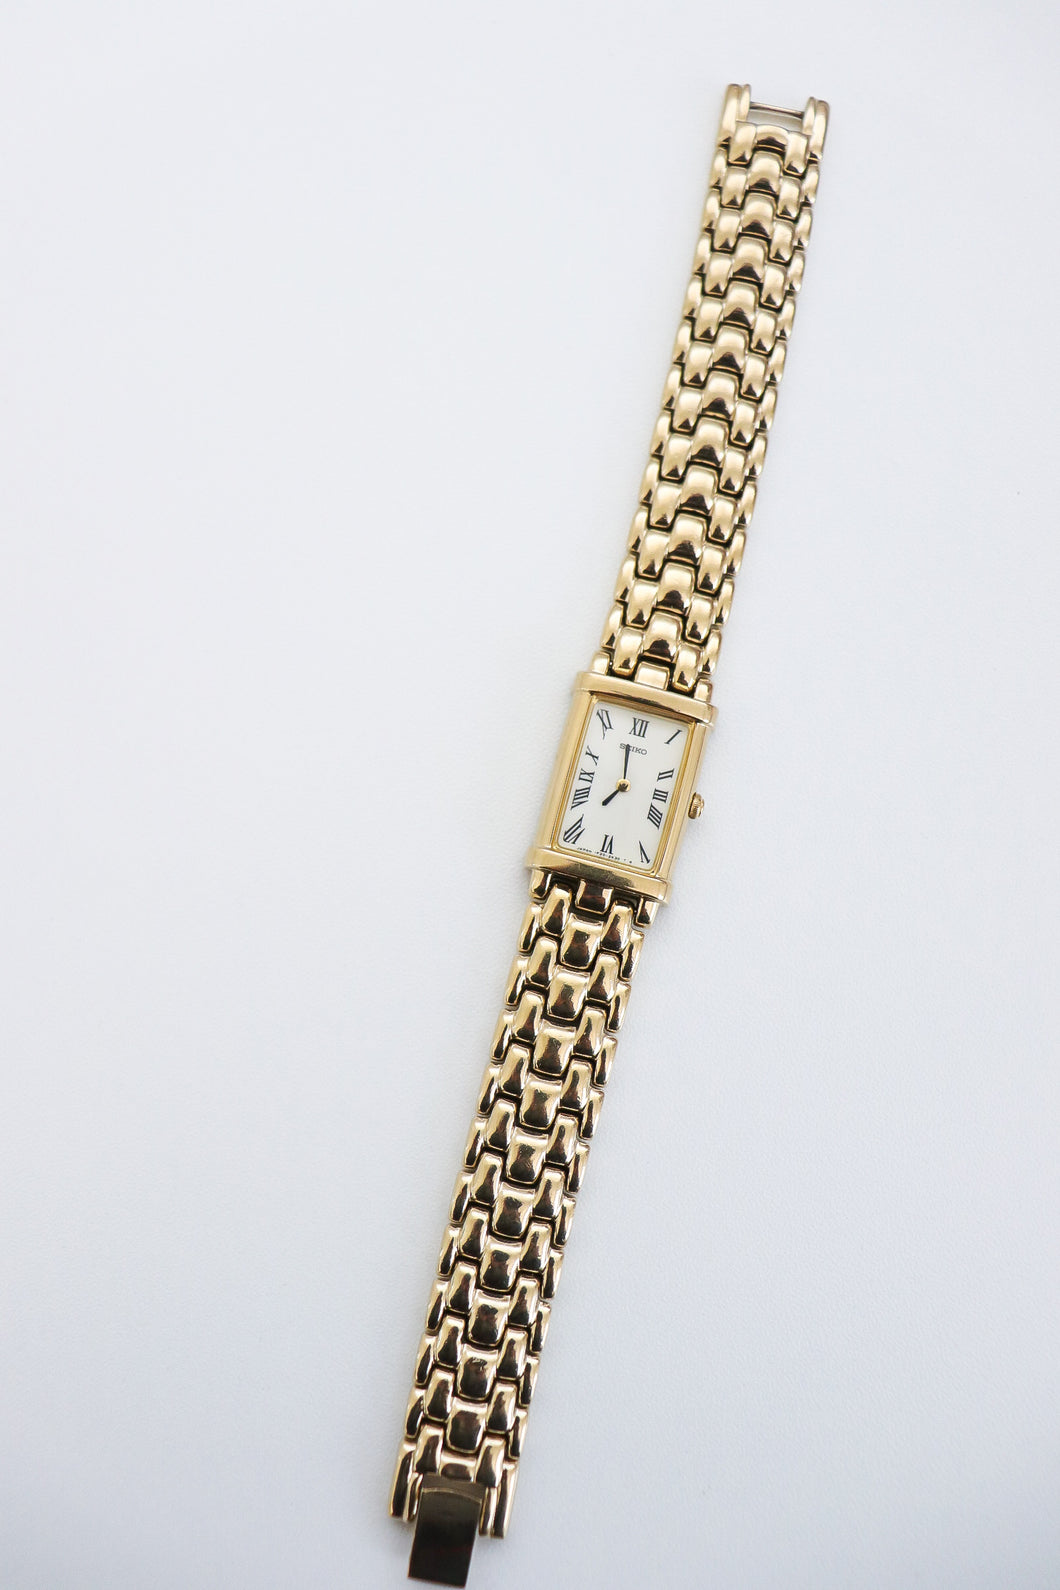 Seiko vintage gold watch